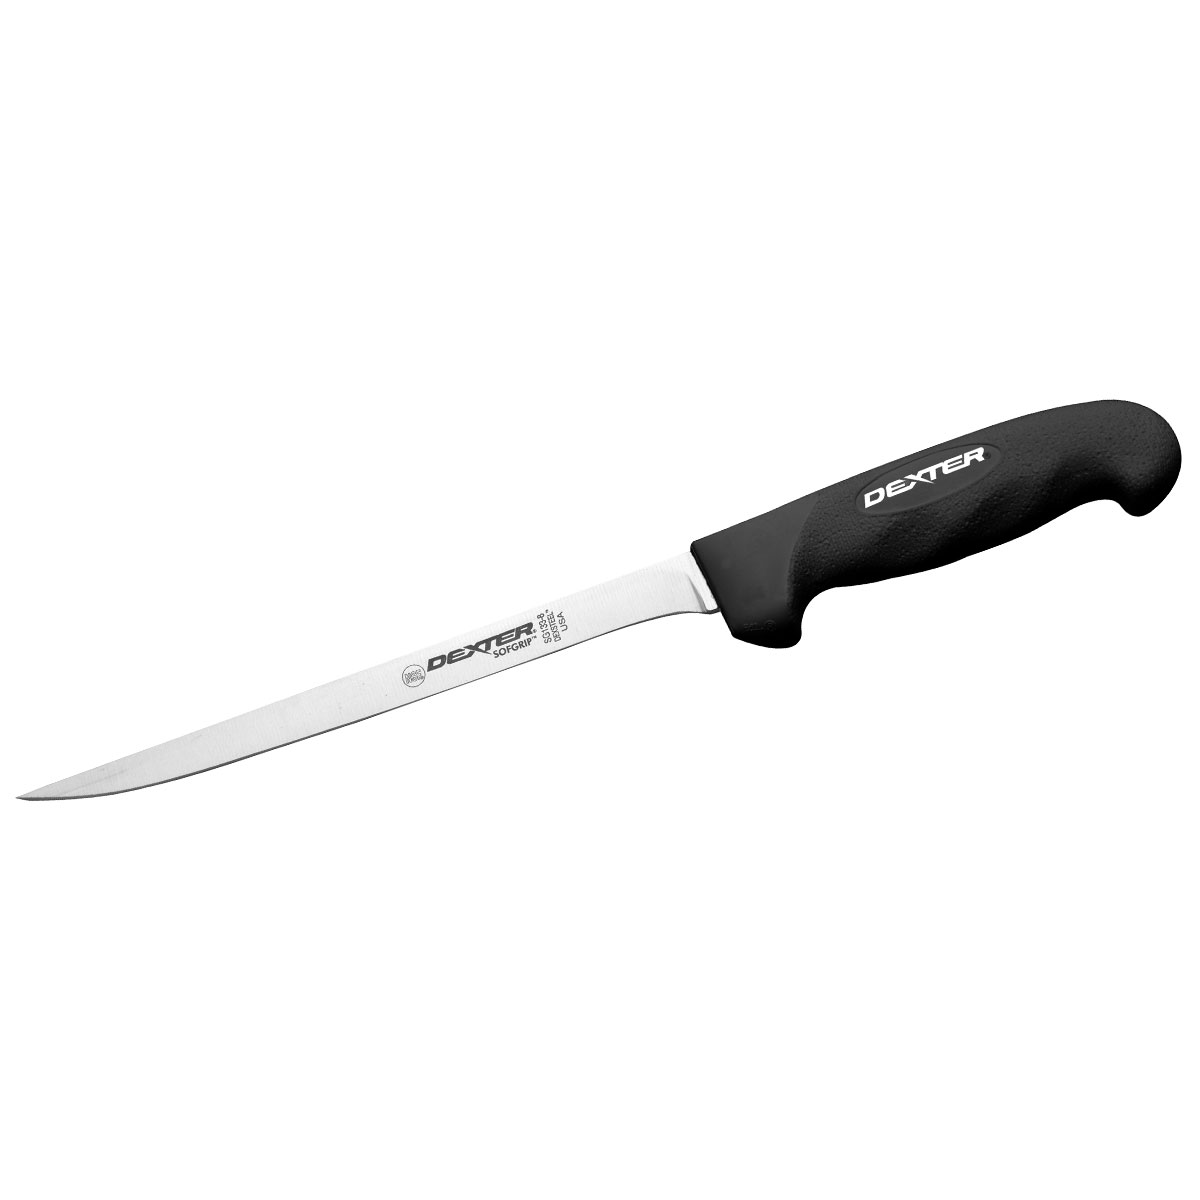 Dexter SOFGRIP® Filleting Knife 8" (20cm) Flexible, Narrow Blade